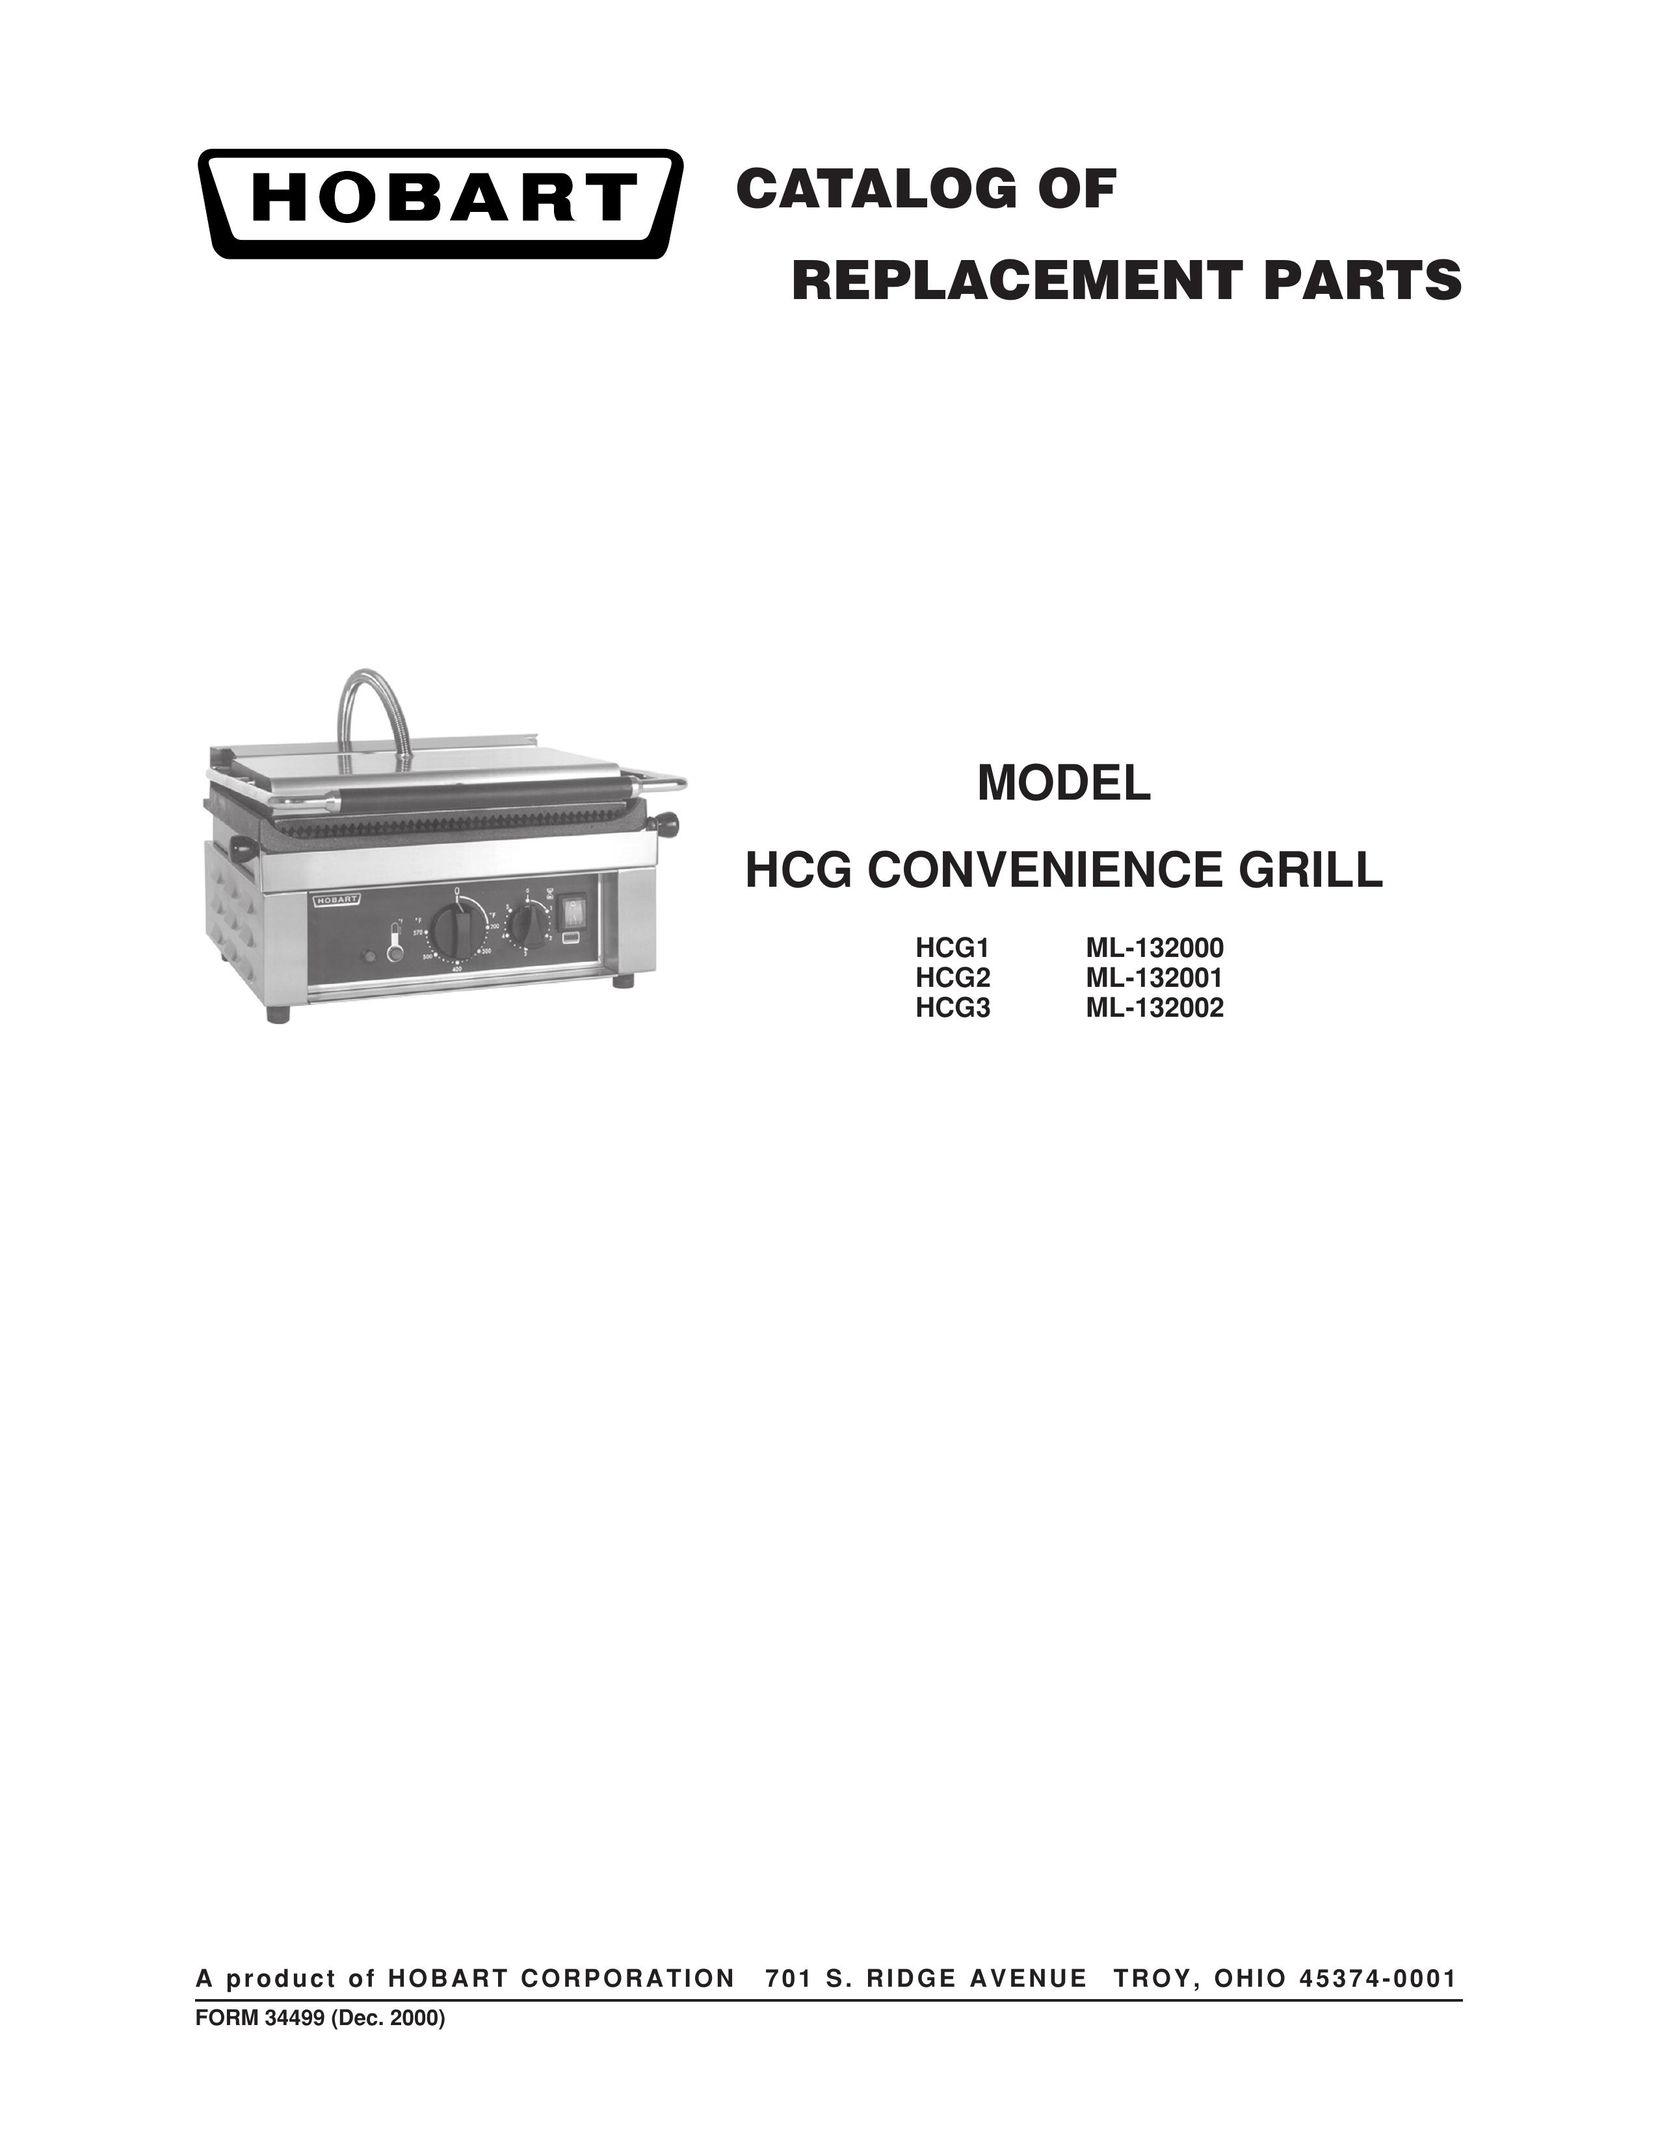 Hobart ML-132002 Kitchen Grill User Manual